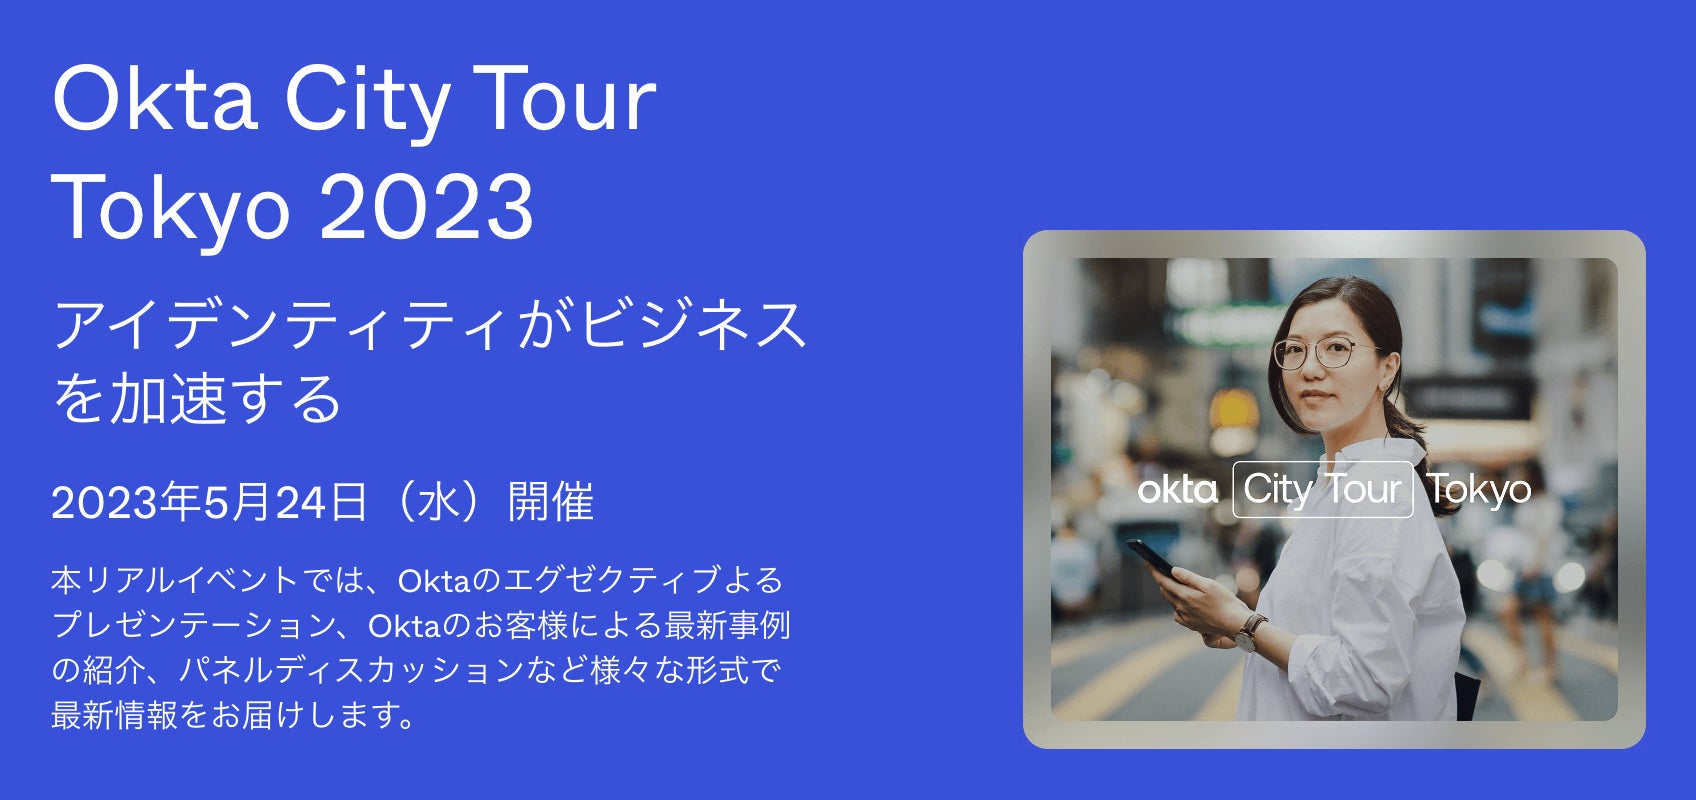 Okta Japan／Okta CEOが初来日して「Okta City Tour Tokyo 2023」 開催